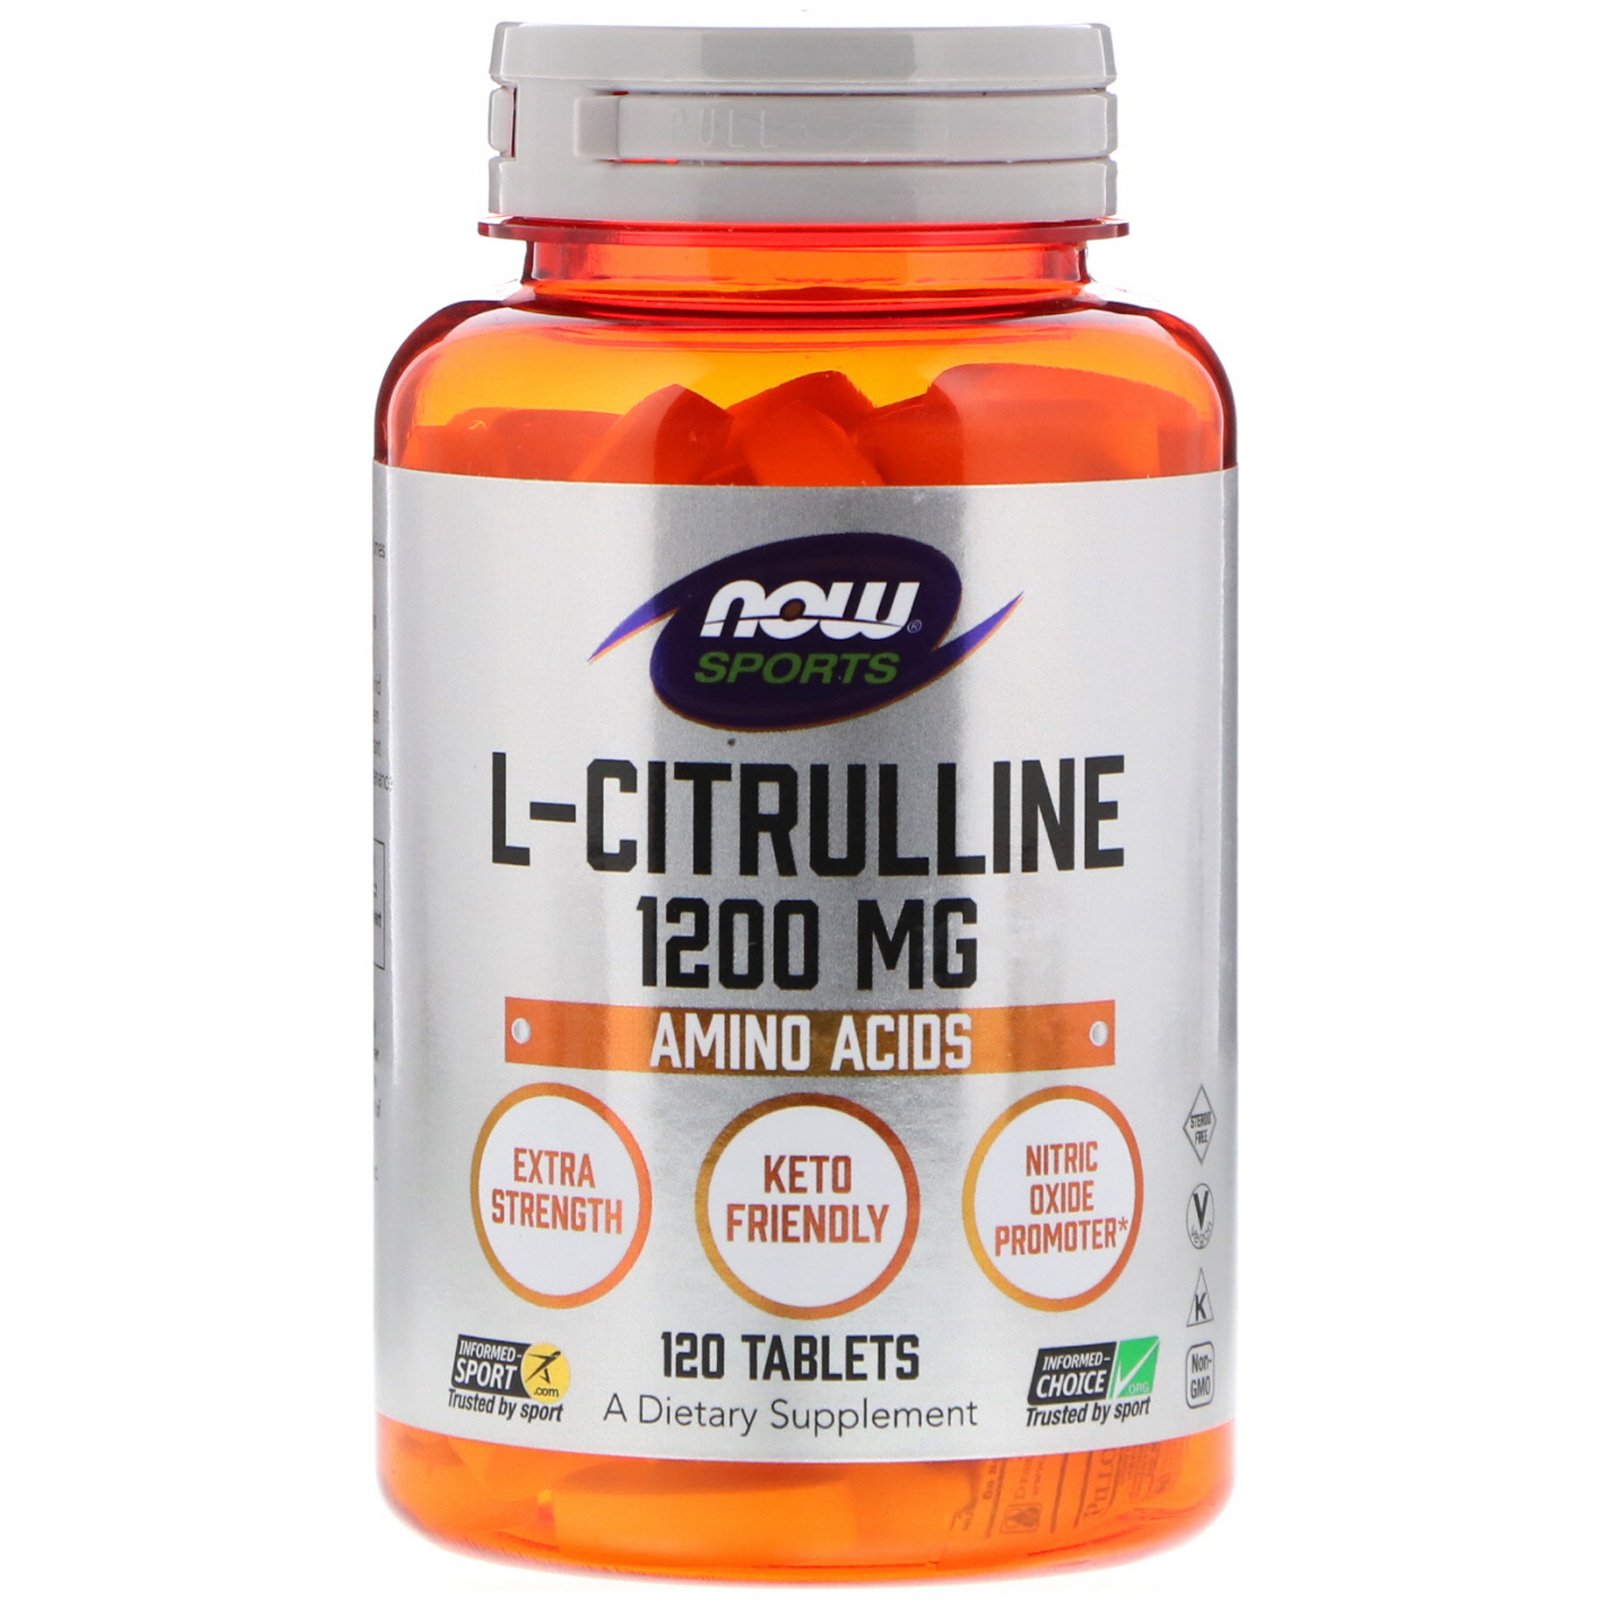 L-Citrulline 1200 mg, 120 piezas, Now. Citrulina. 